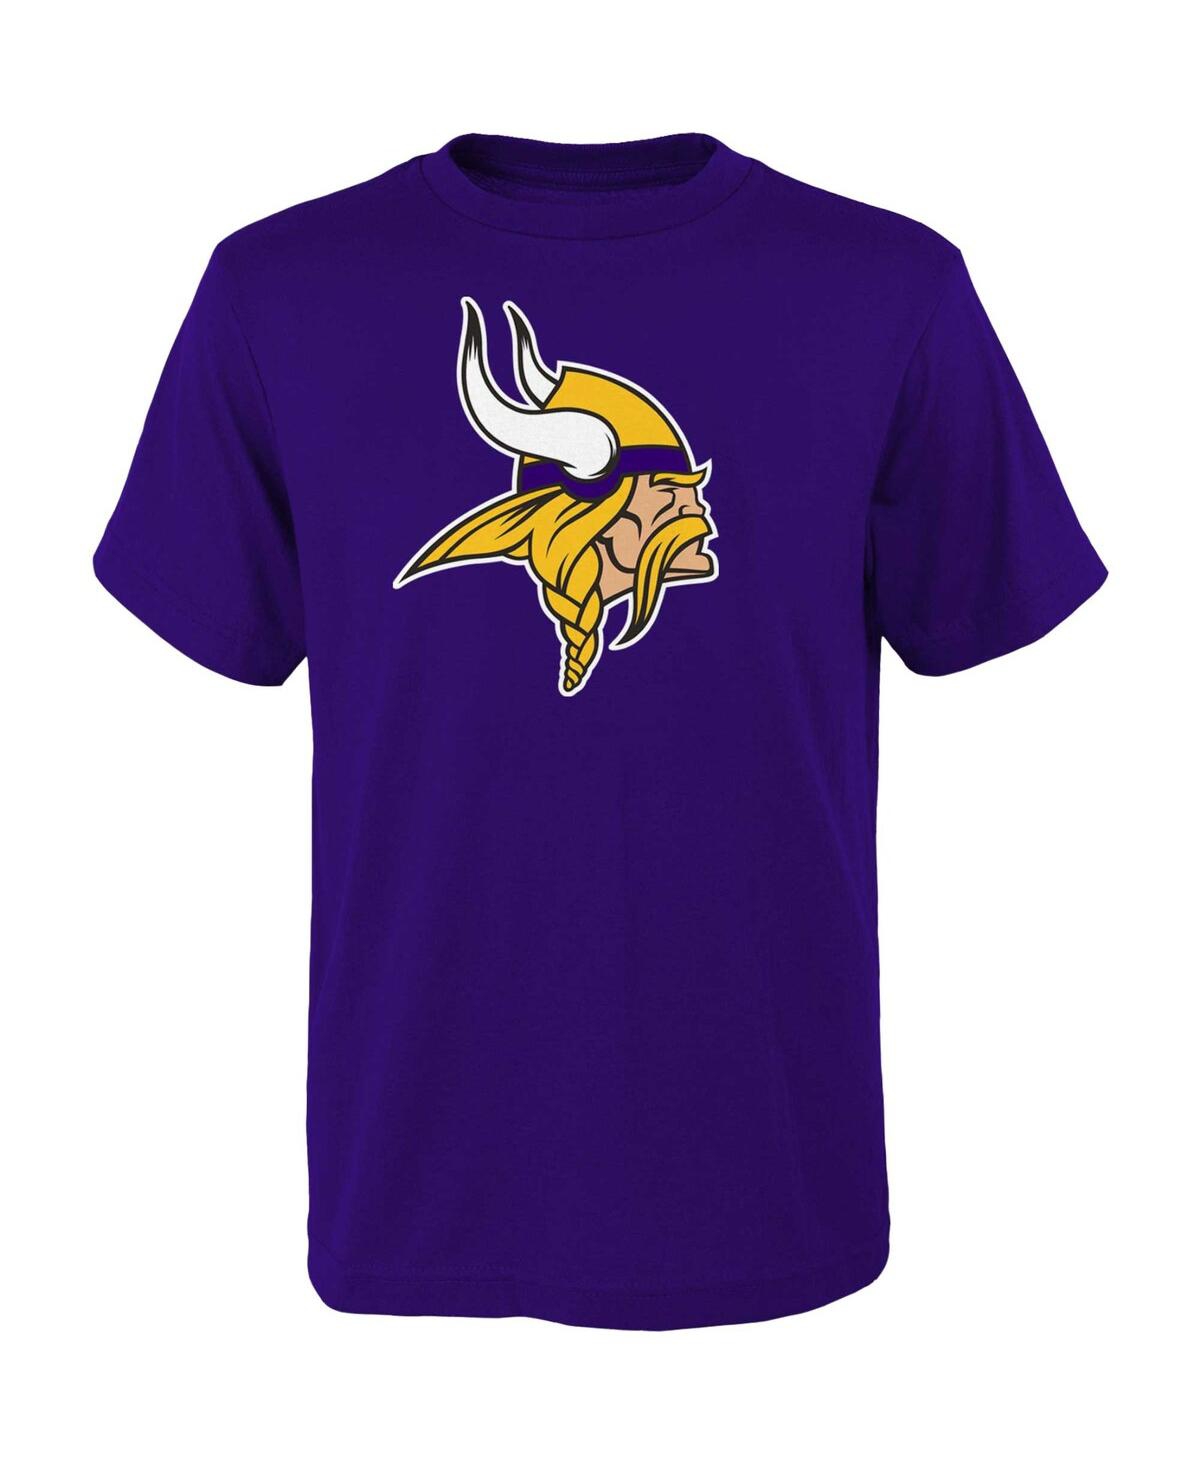 Outerstuff Kids' Big Boys Purple Minnesota Vikings Primary Logo T-shirt